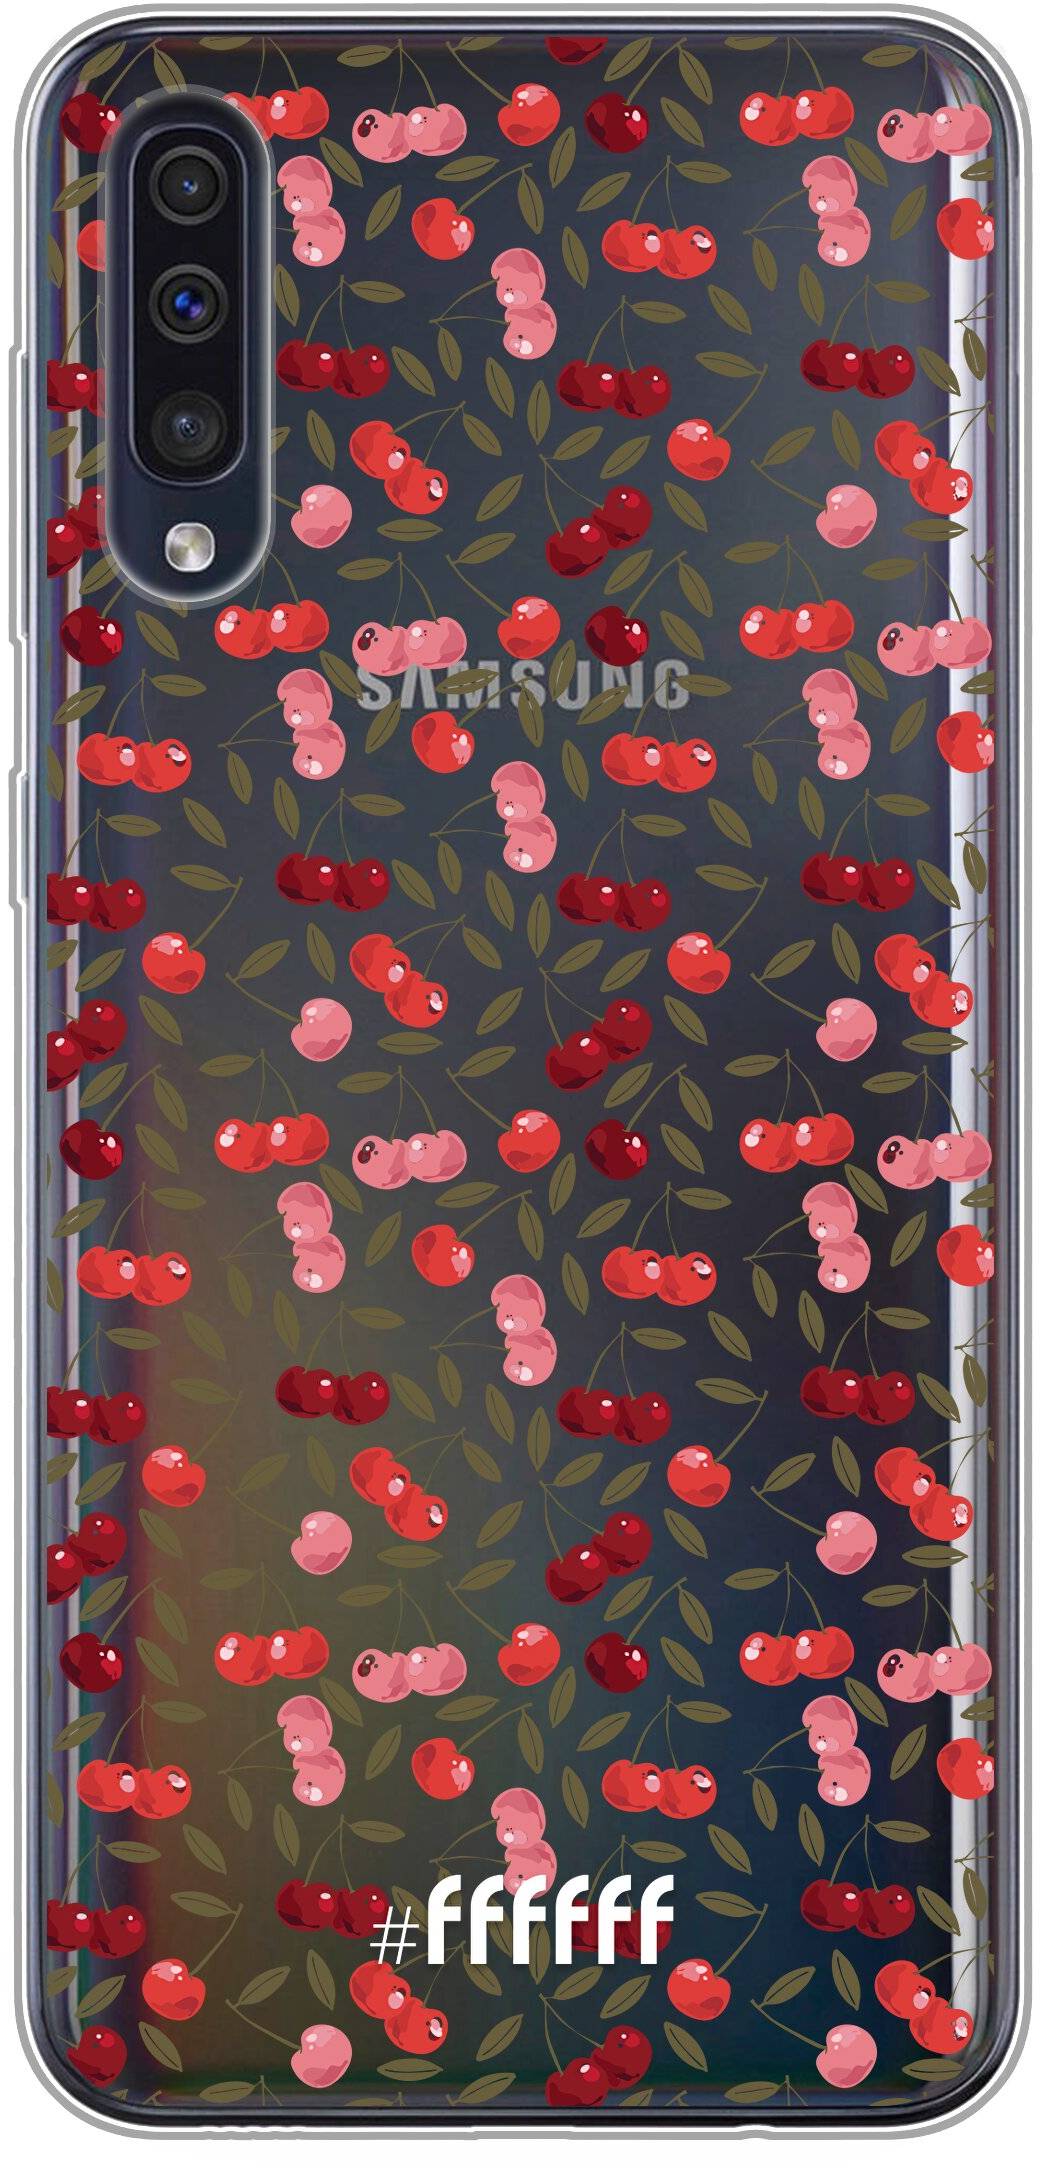 Cherry's Galaxy A50s